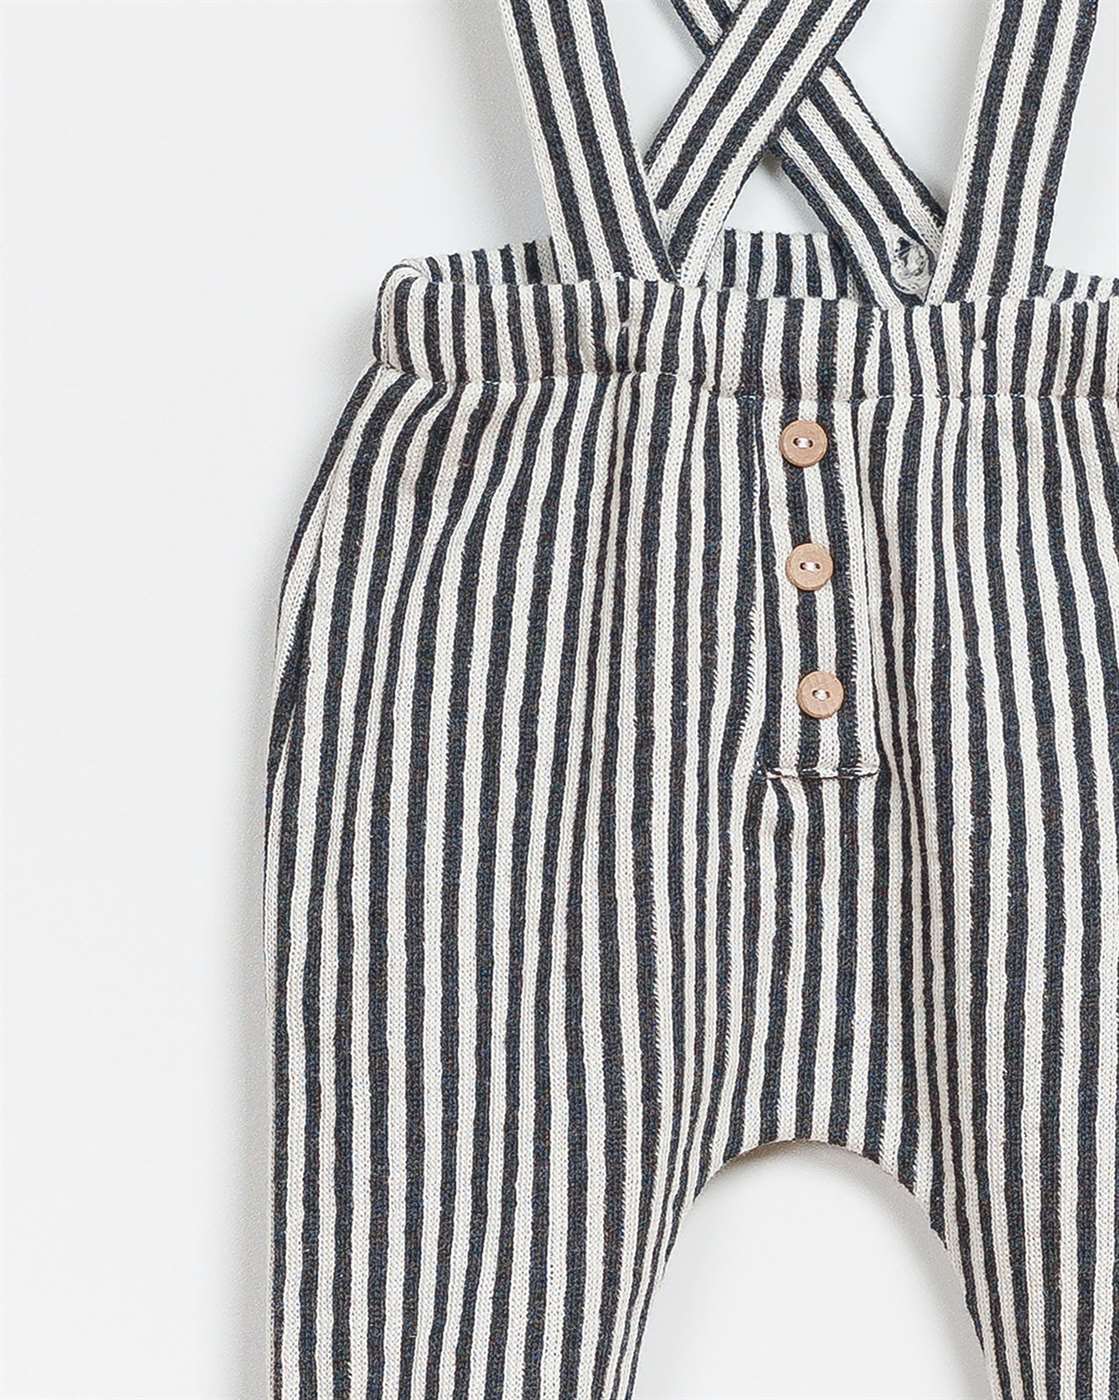 BeeBoo|BeeBoo PlayUp vêtements bébé baby clothes salopette overall rayures stripes coton bio organic cotton gris grey 2